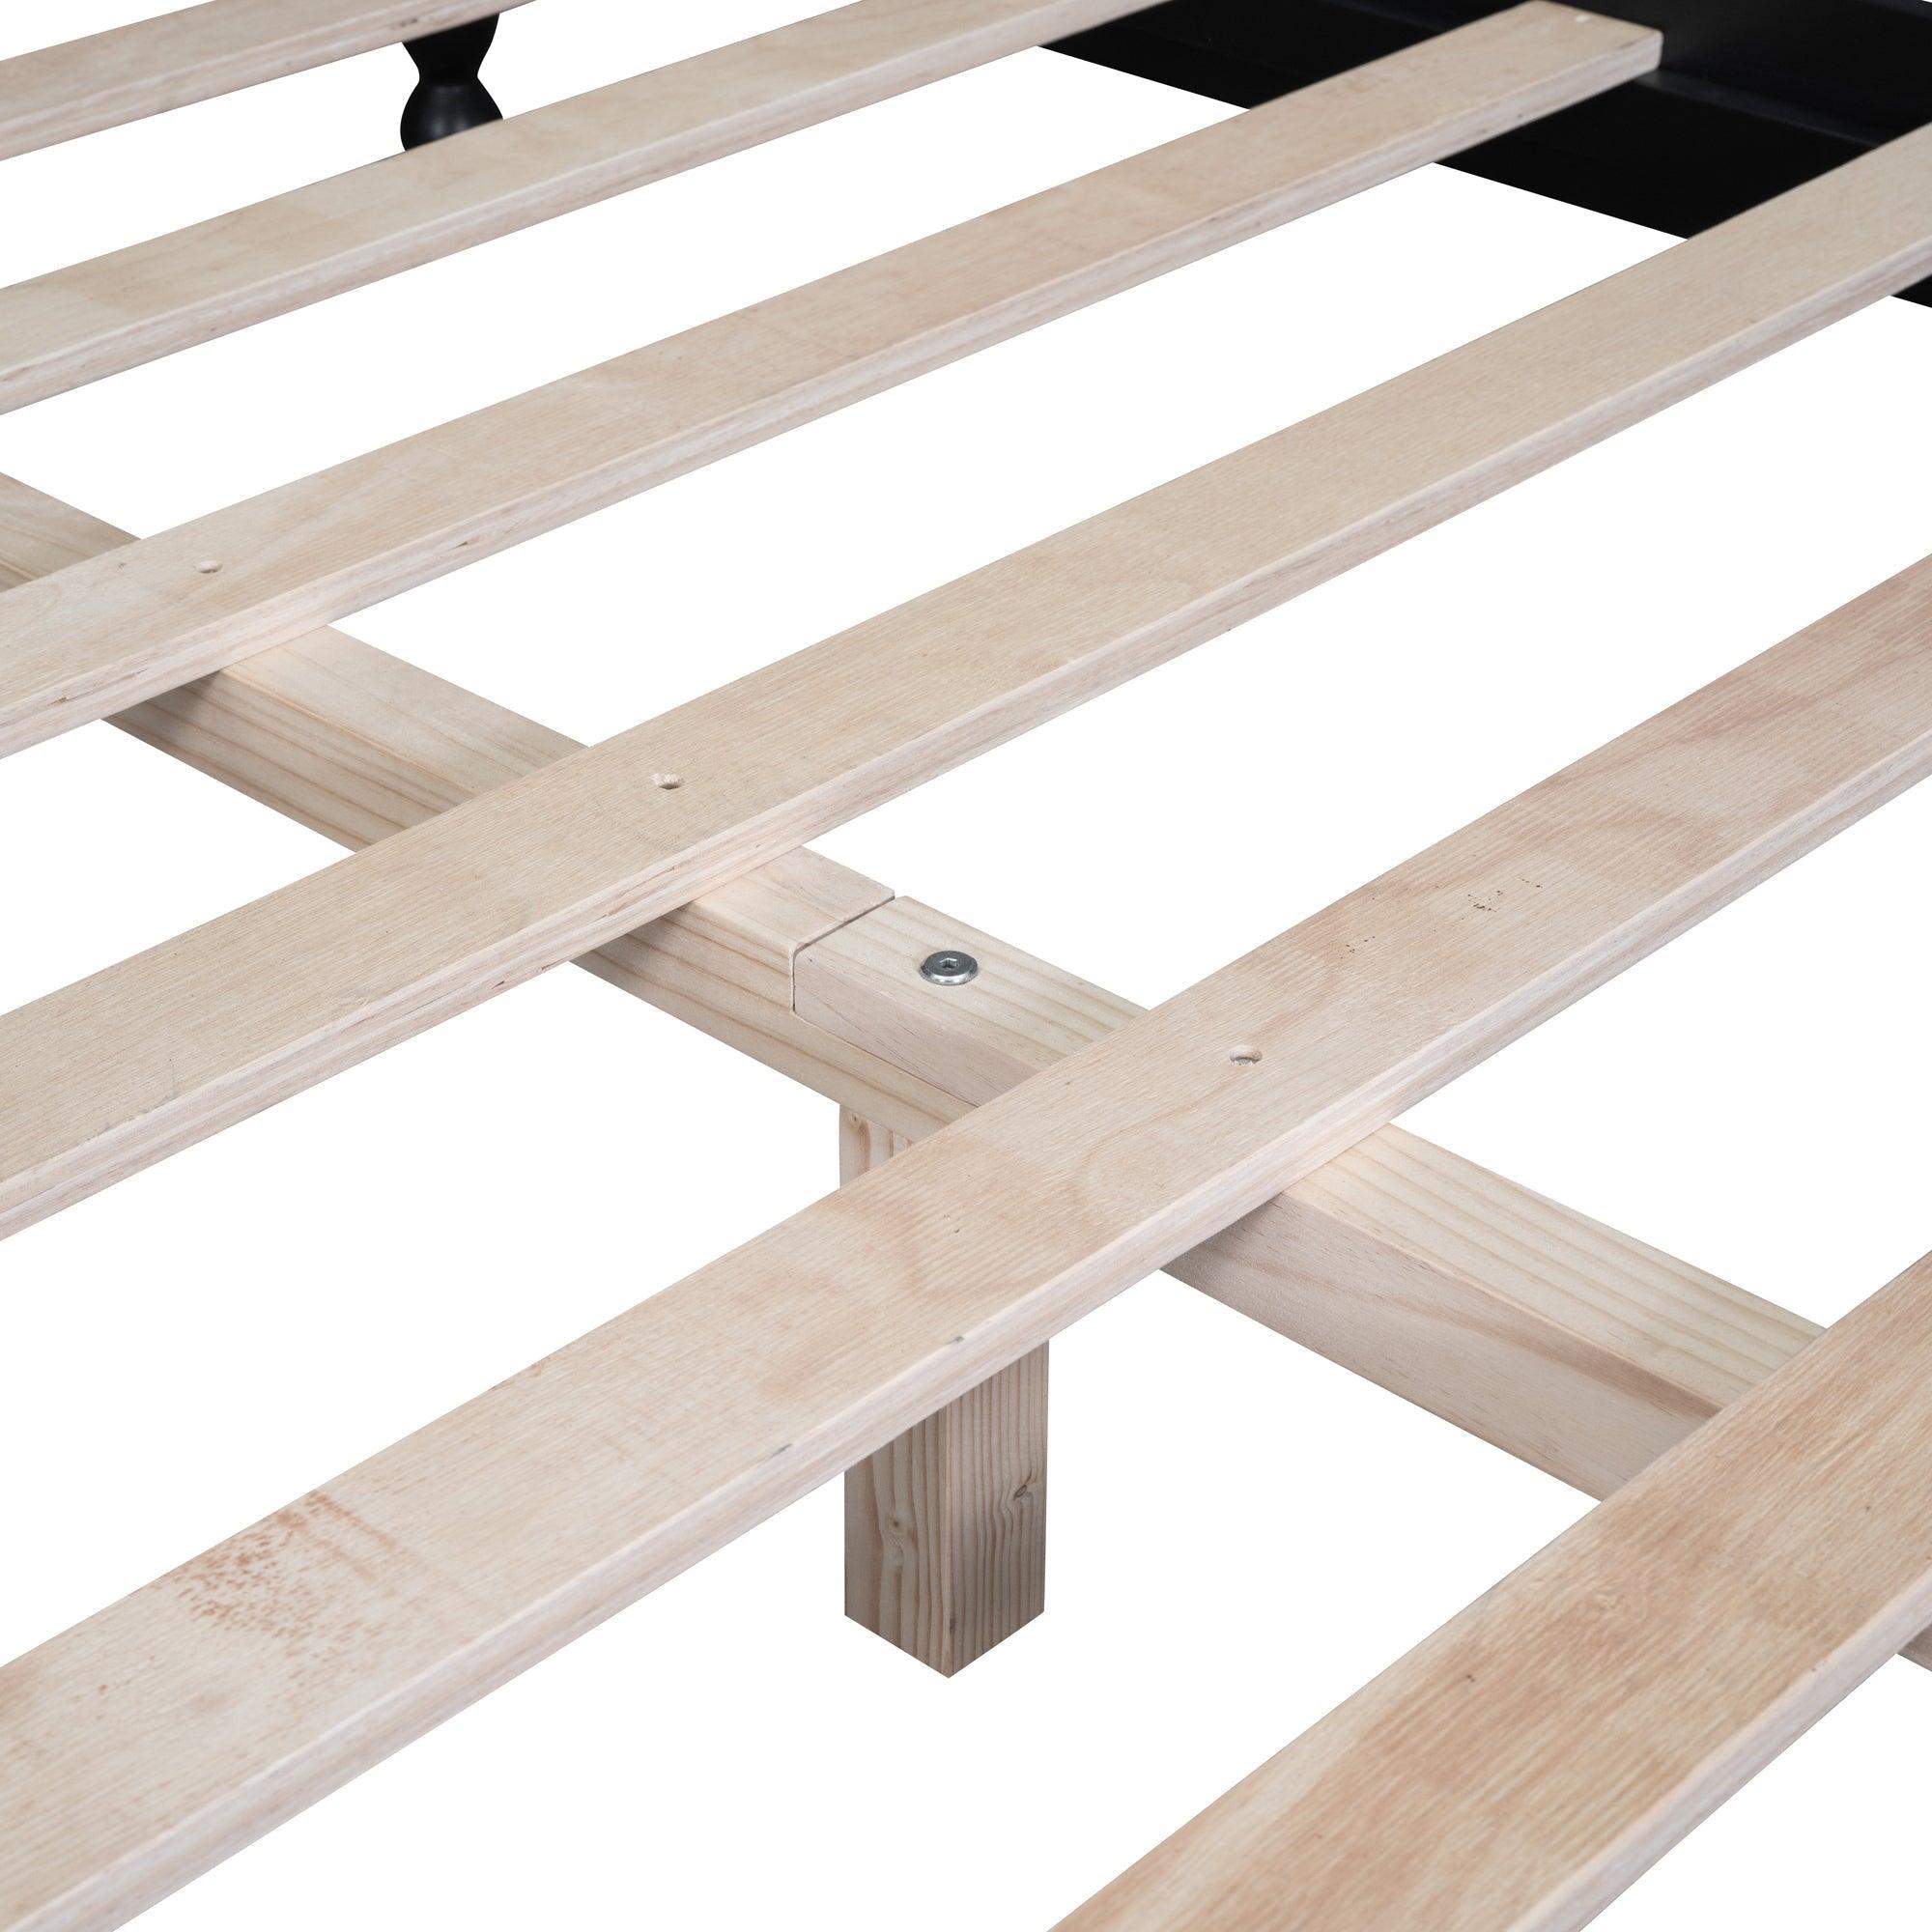 CIFYUN Full Size Retro Style Wood Platform Bed Frame, Black LamCham